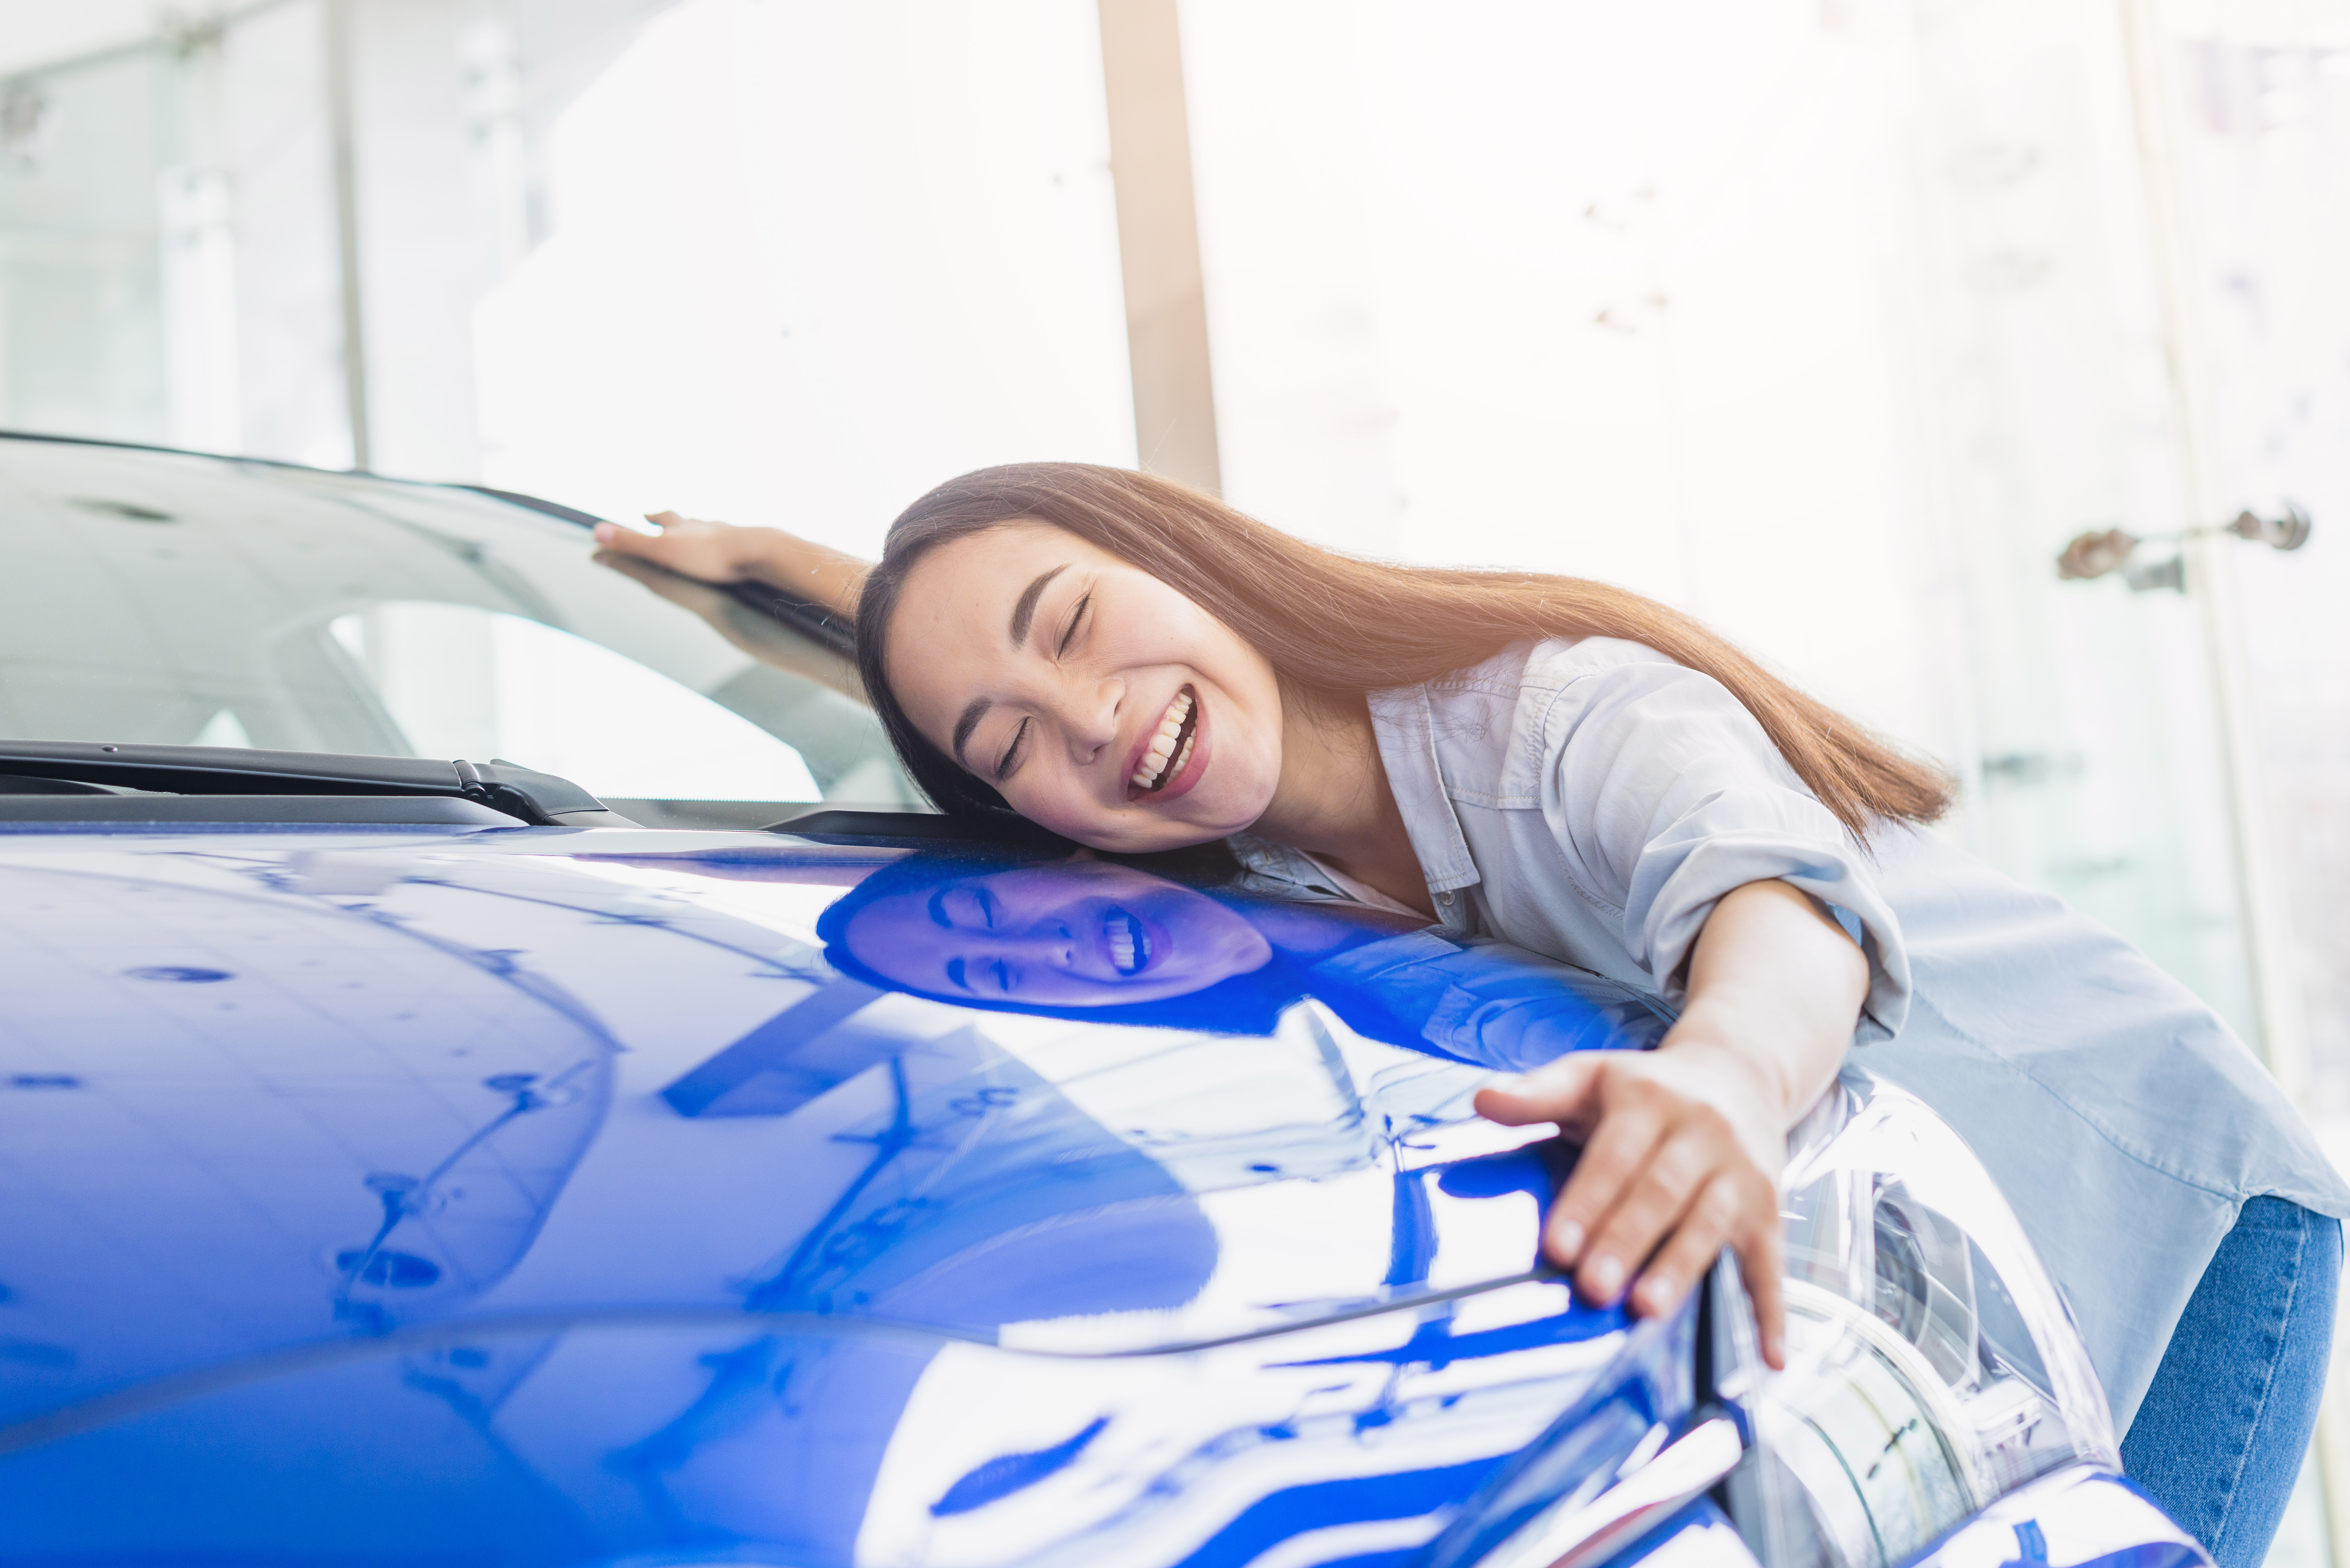 Young girl hugging a blue car's hood | Source: Freepik